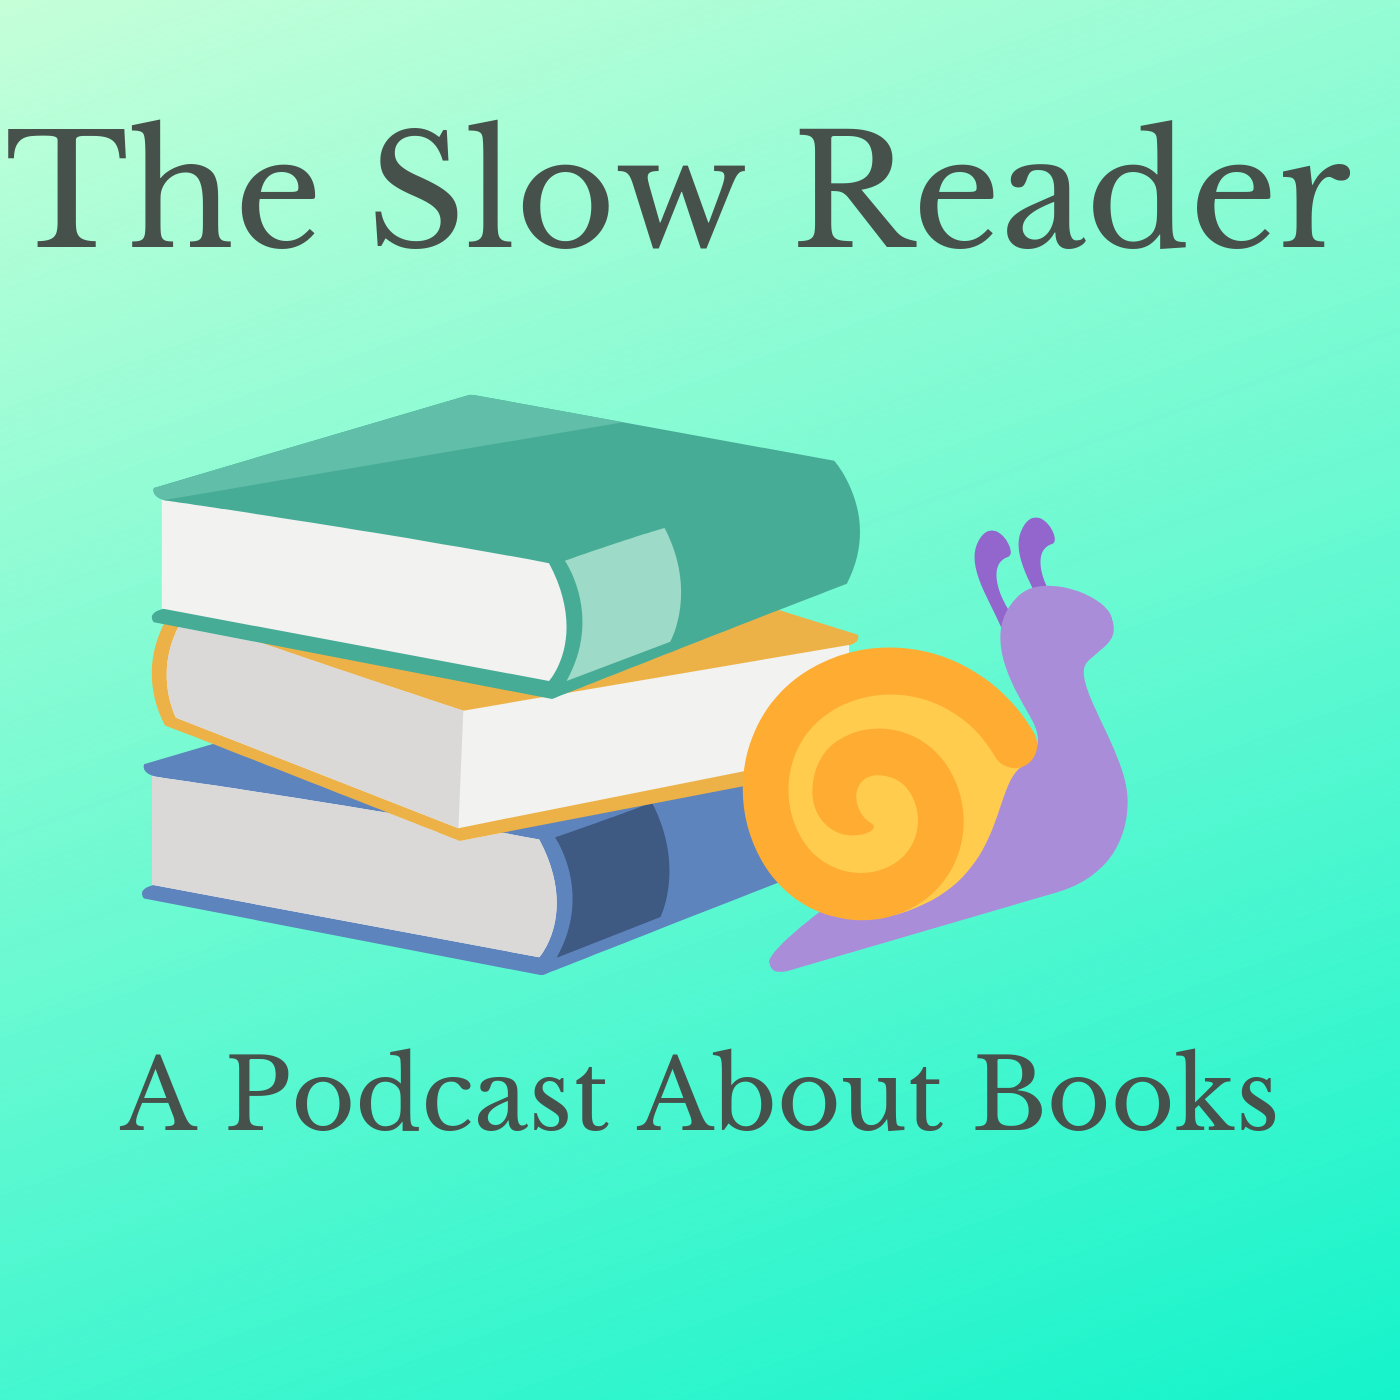 The Slow Reader podcast logo